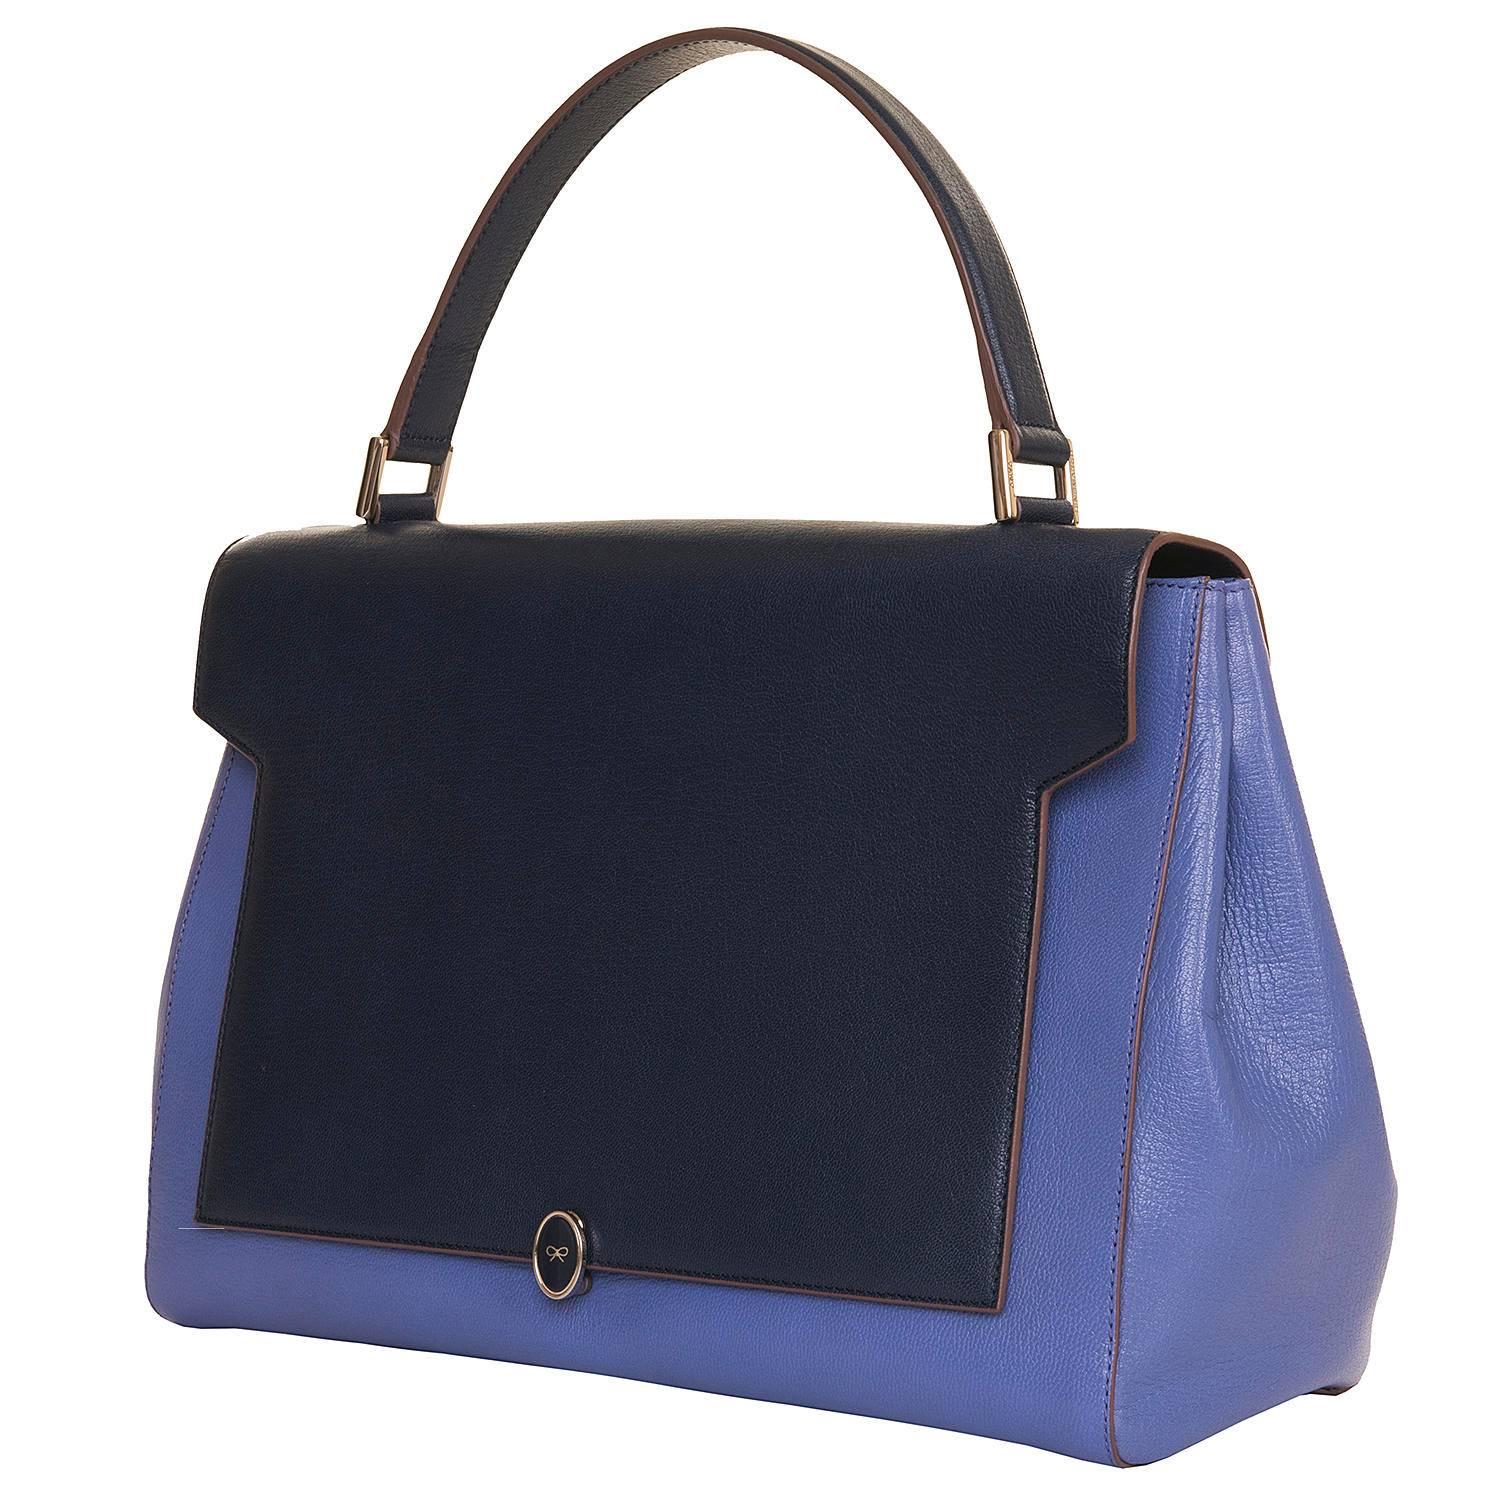 Women's NEW & UNUSED Fabulous Anya Hindmarsh 'Bathurst' GM Bag & Matching Purse For Sale